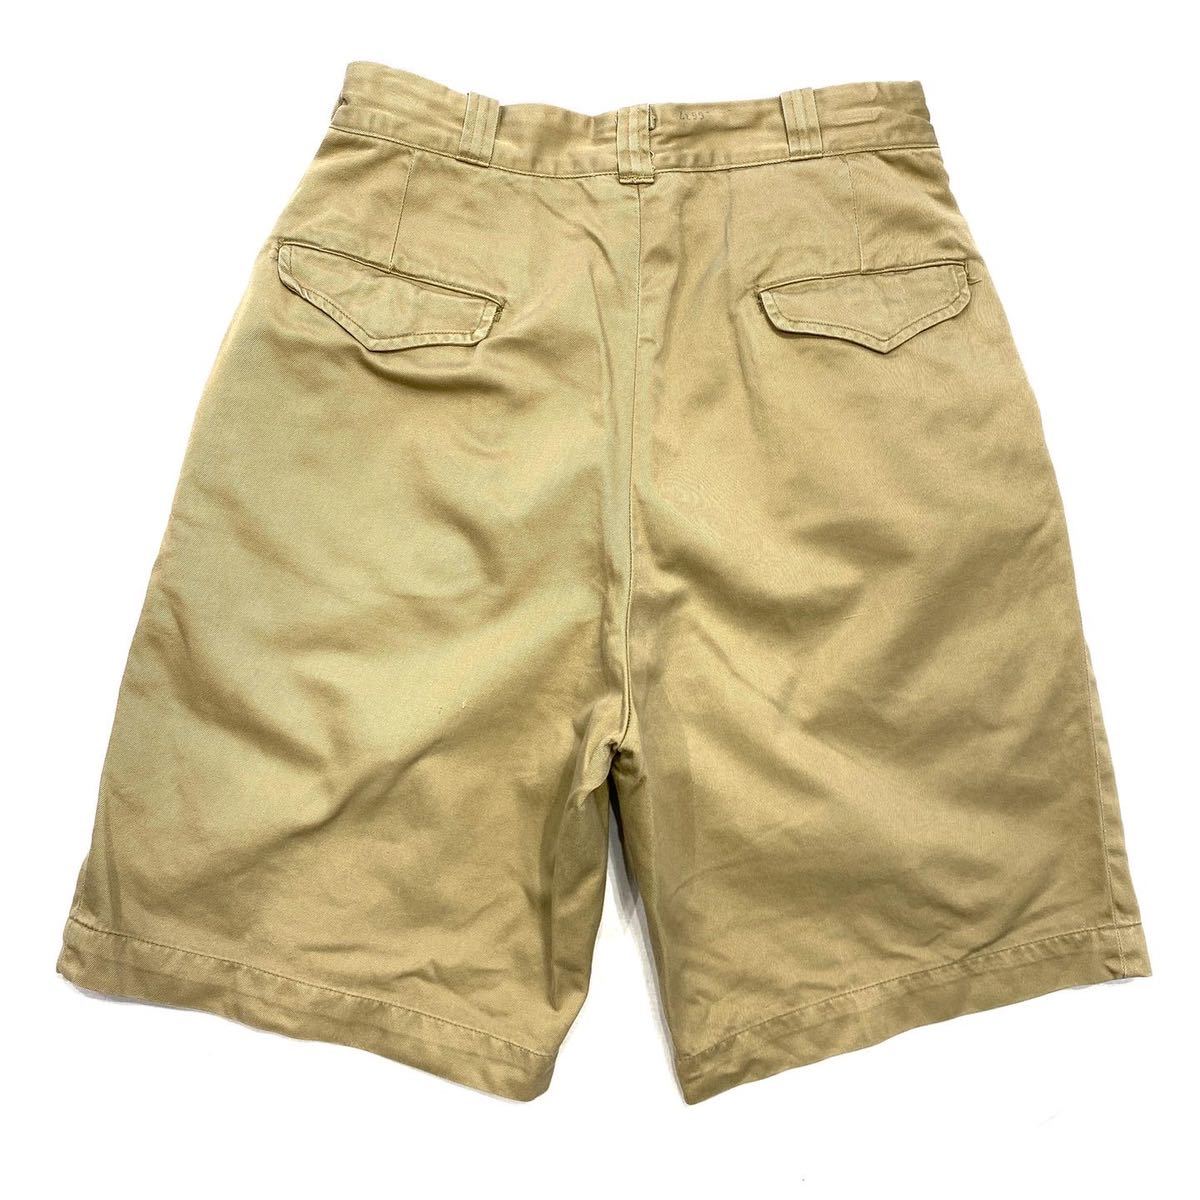  rare size! 50s America army chino shorts / size 29 / chinos army chino Army shorts pants Army chino